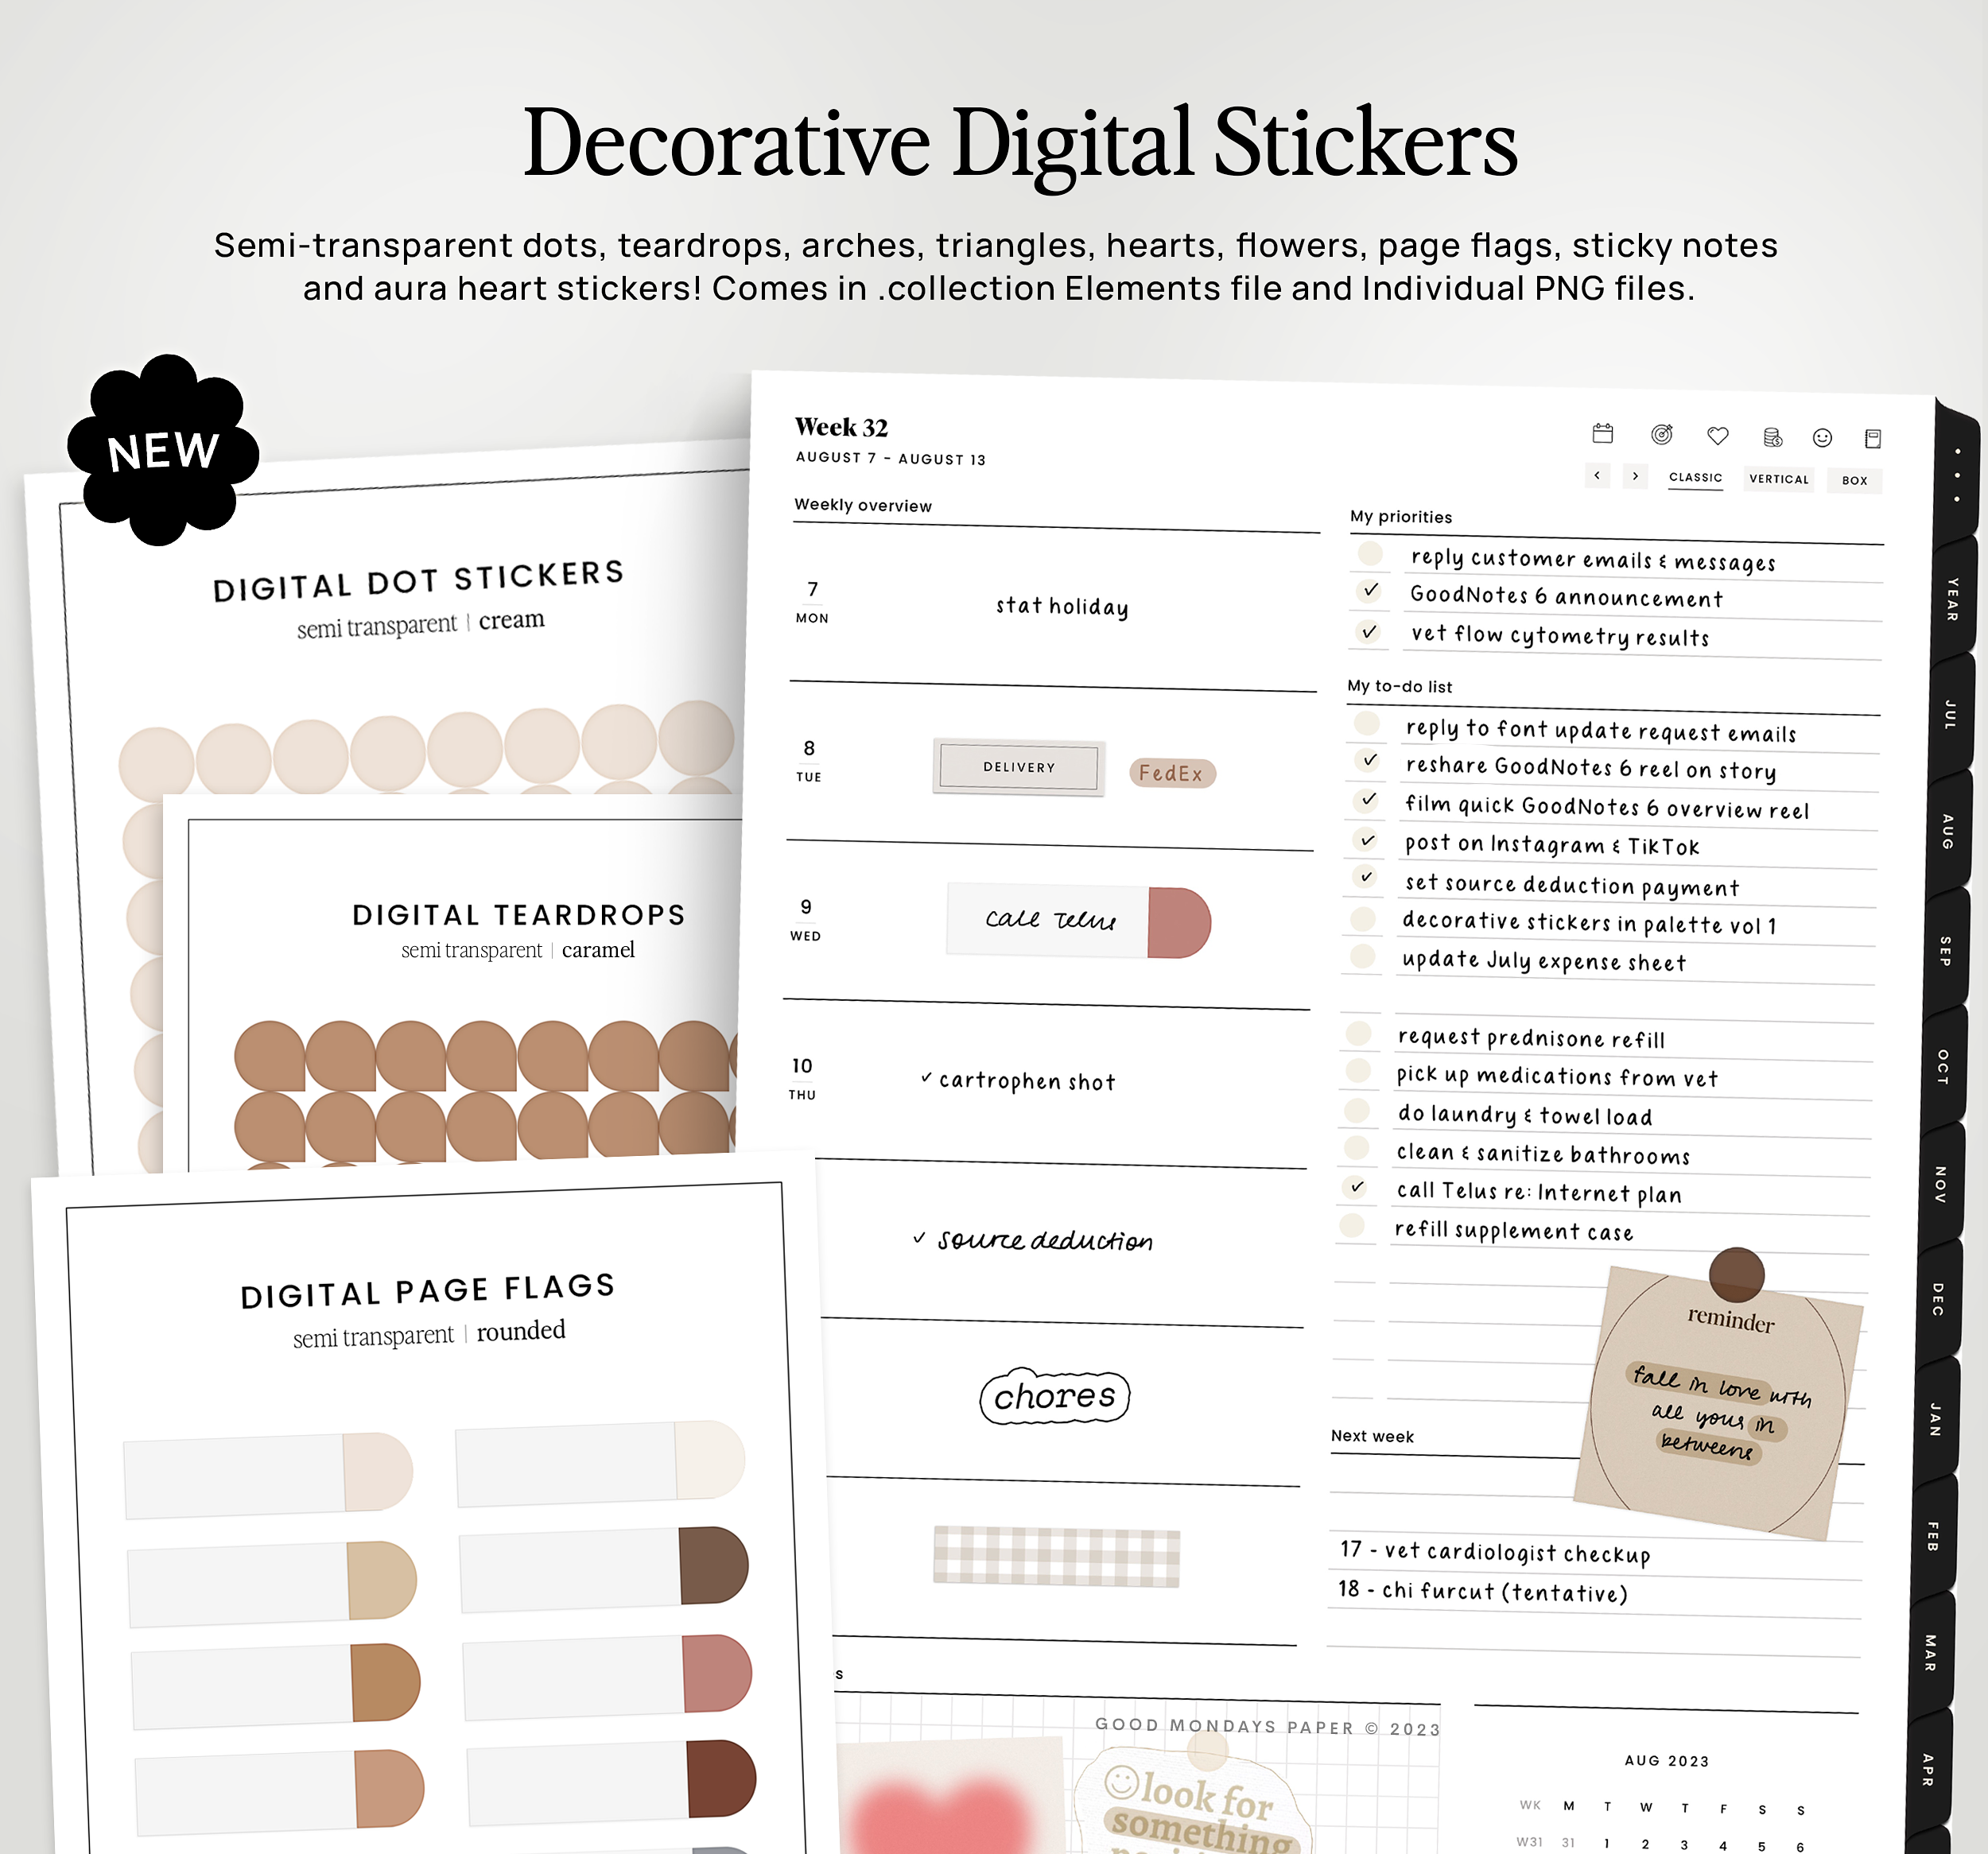 Devices Deco Sticker Sheet